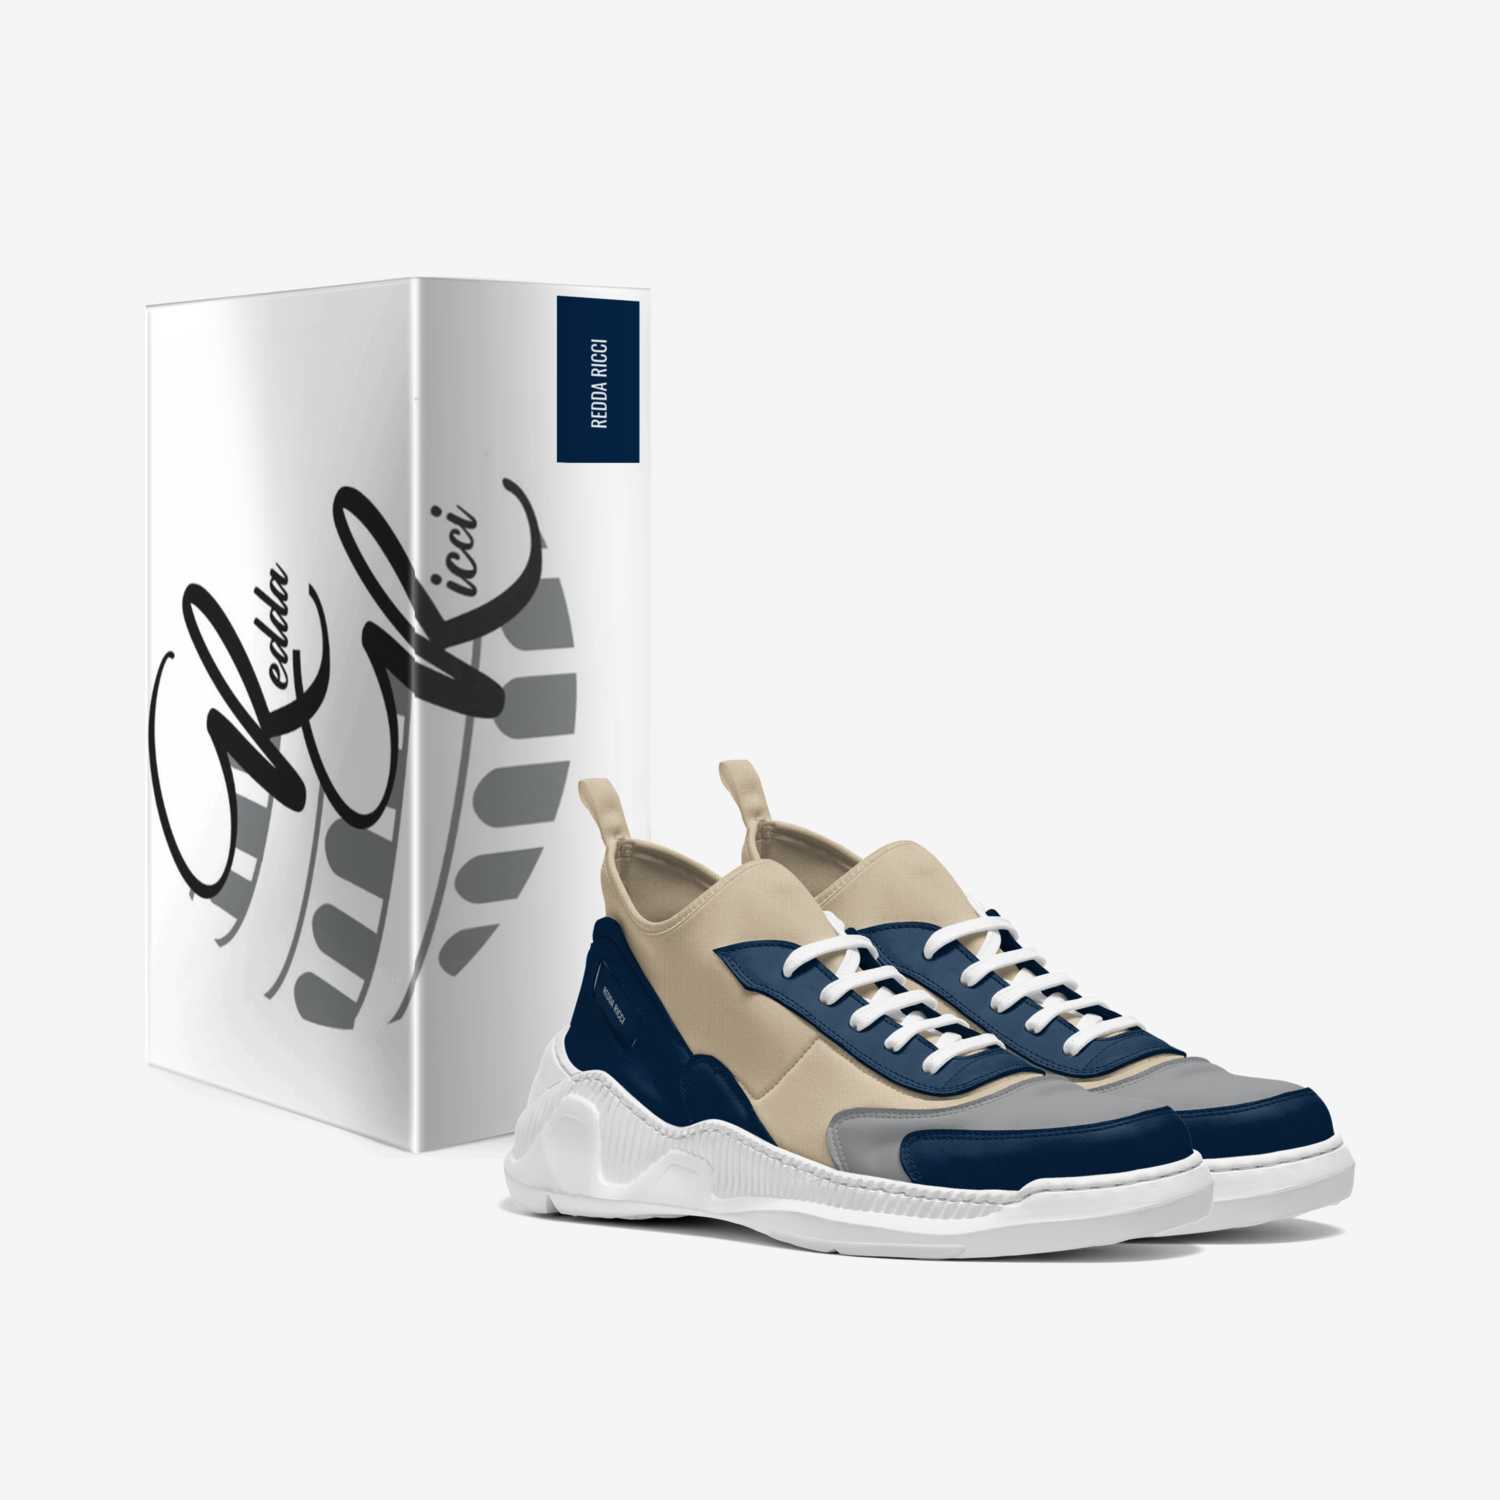 Redda Ricci  custom made in Italy shoes by Julian Kay | Box view